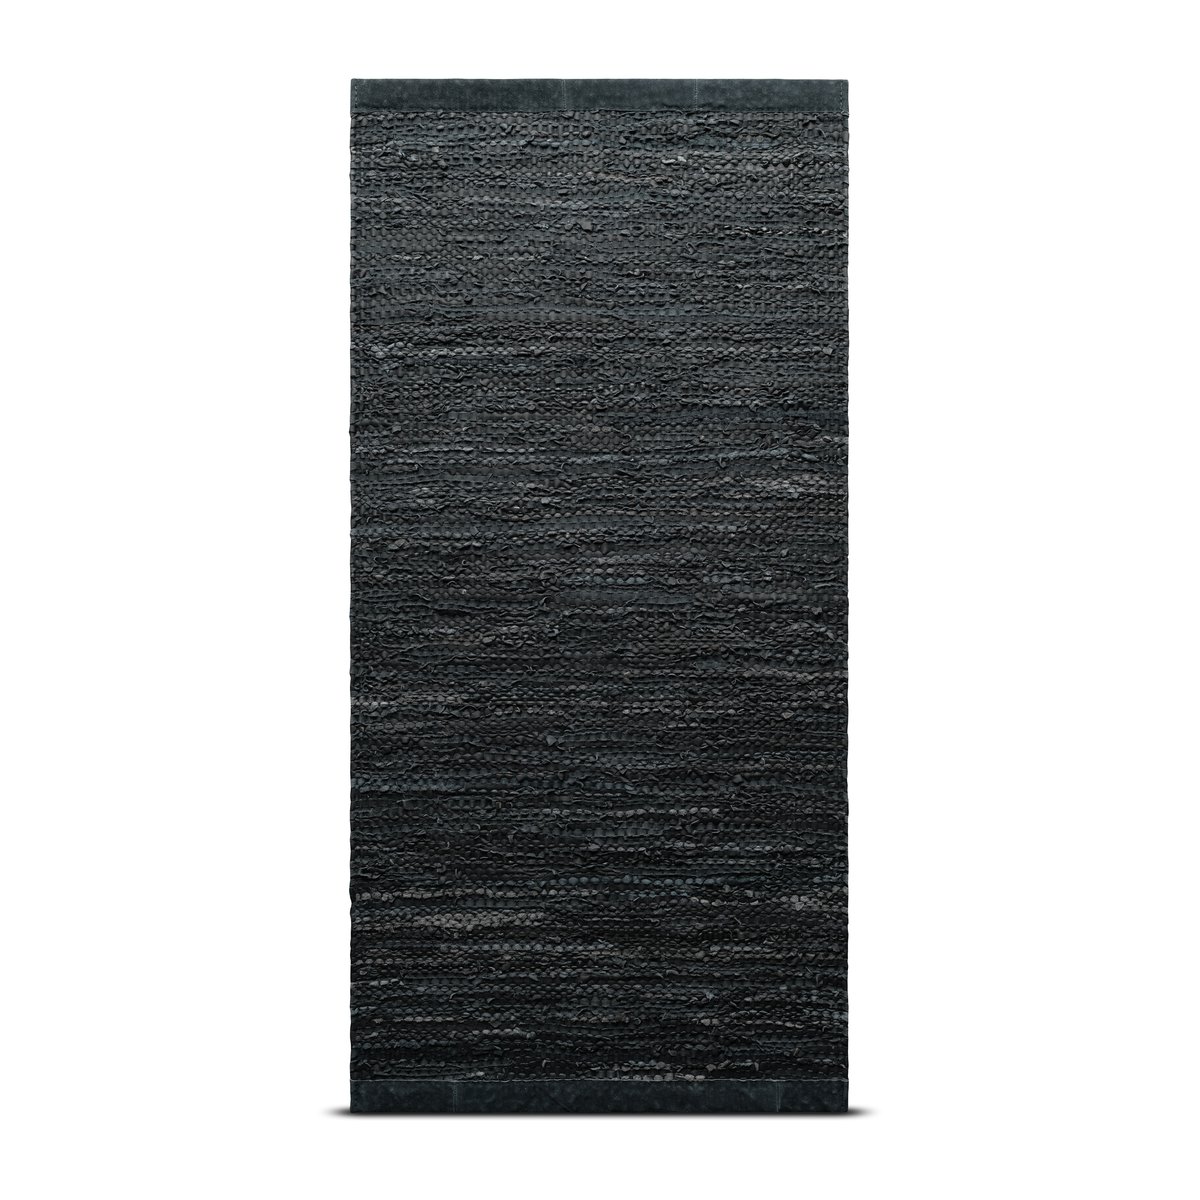 Rug Solid Leather vloerkleed 200 x 300 cm. dark grey (donkergrijs)